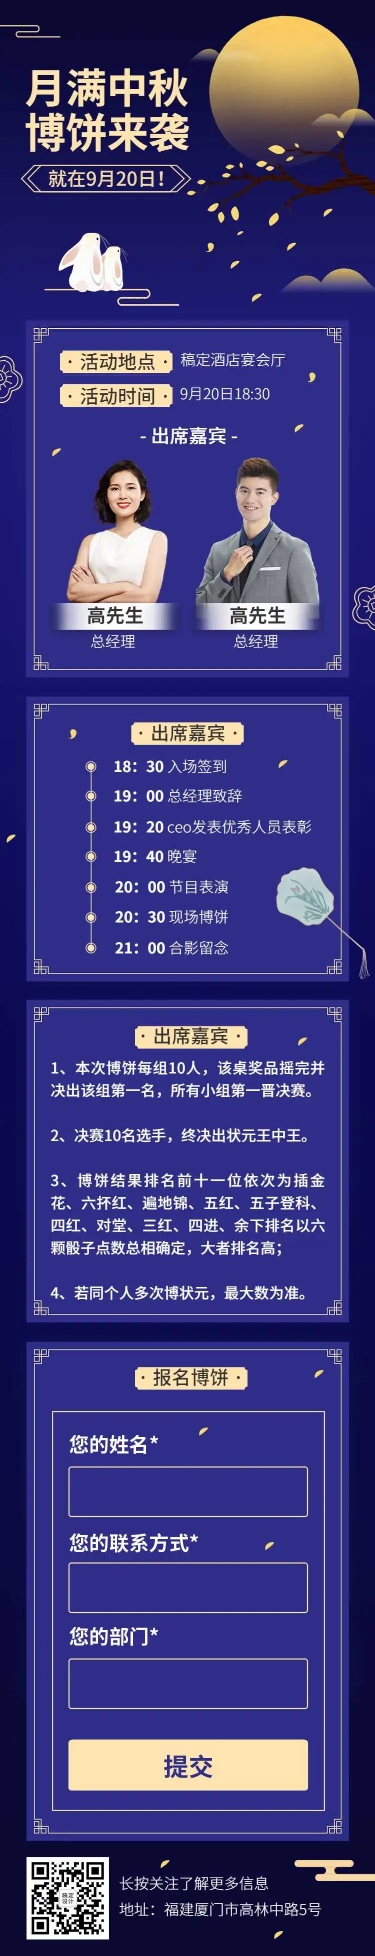 H5长页中秋节企业博饼活动长图